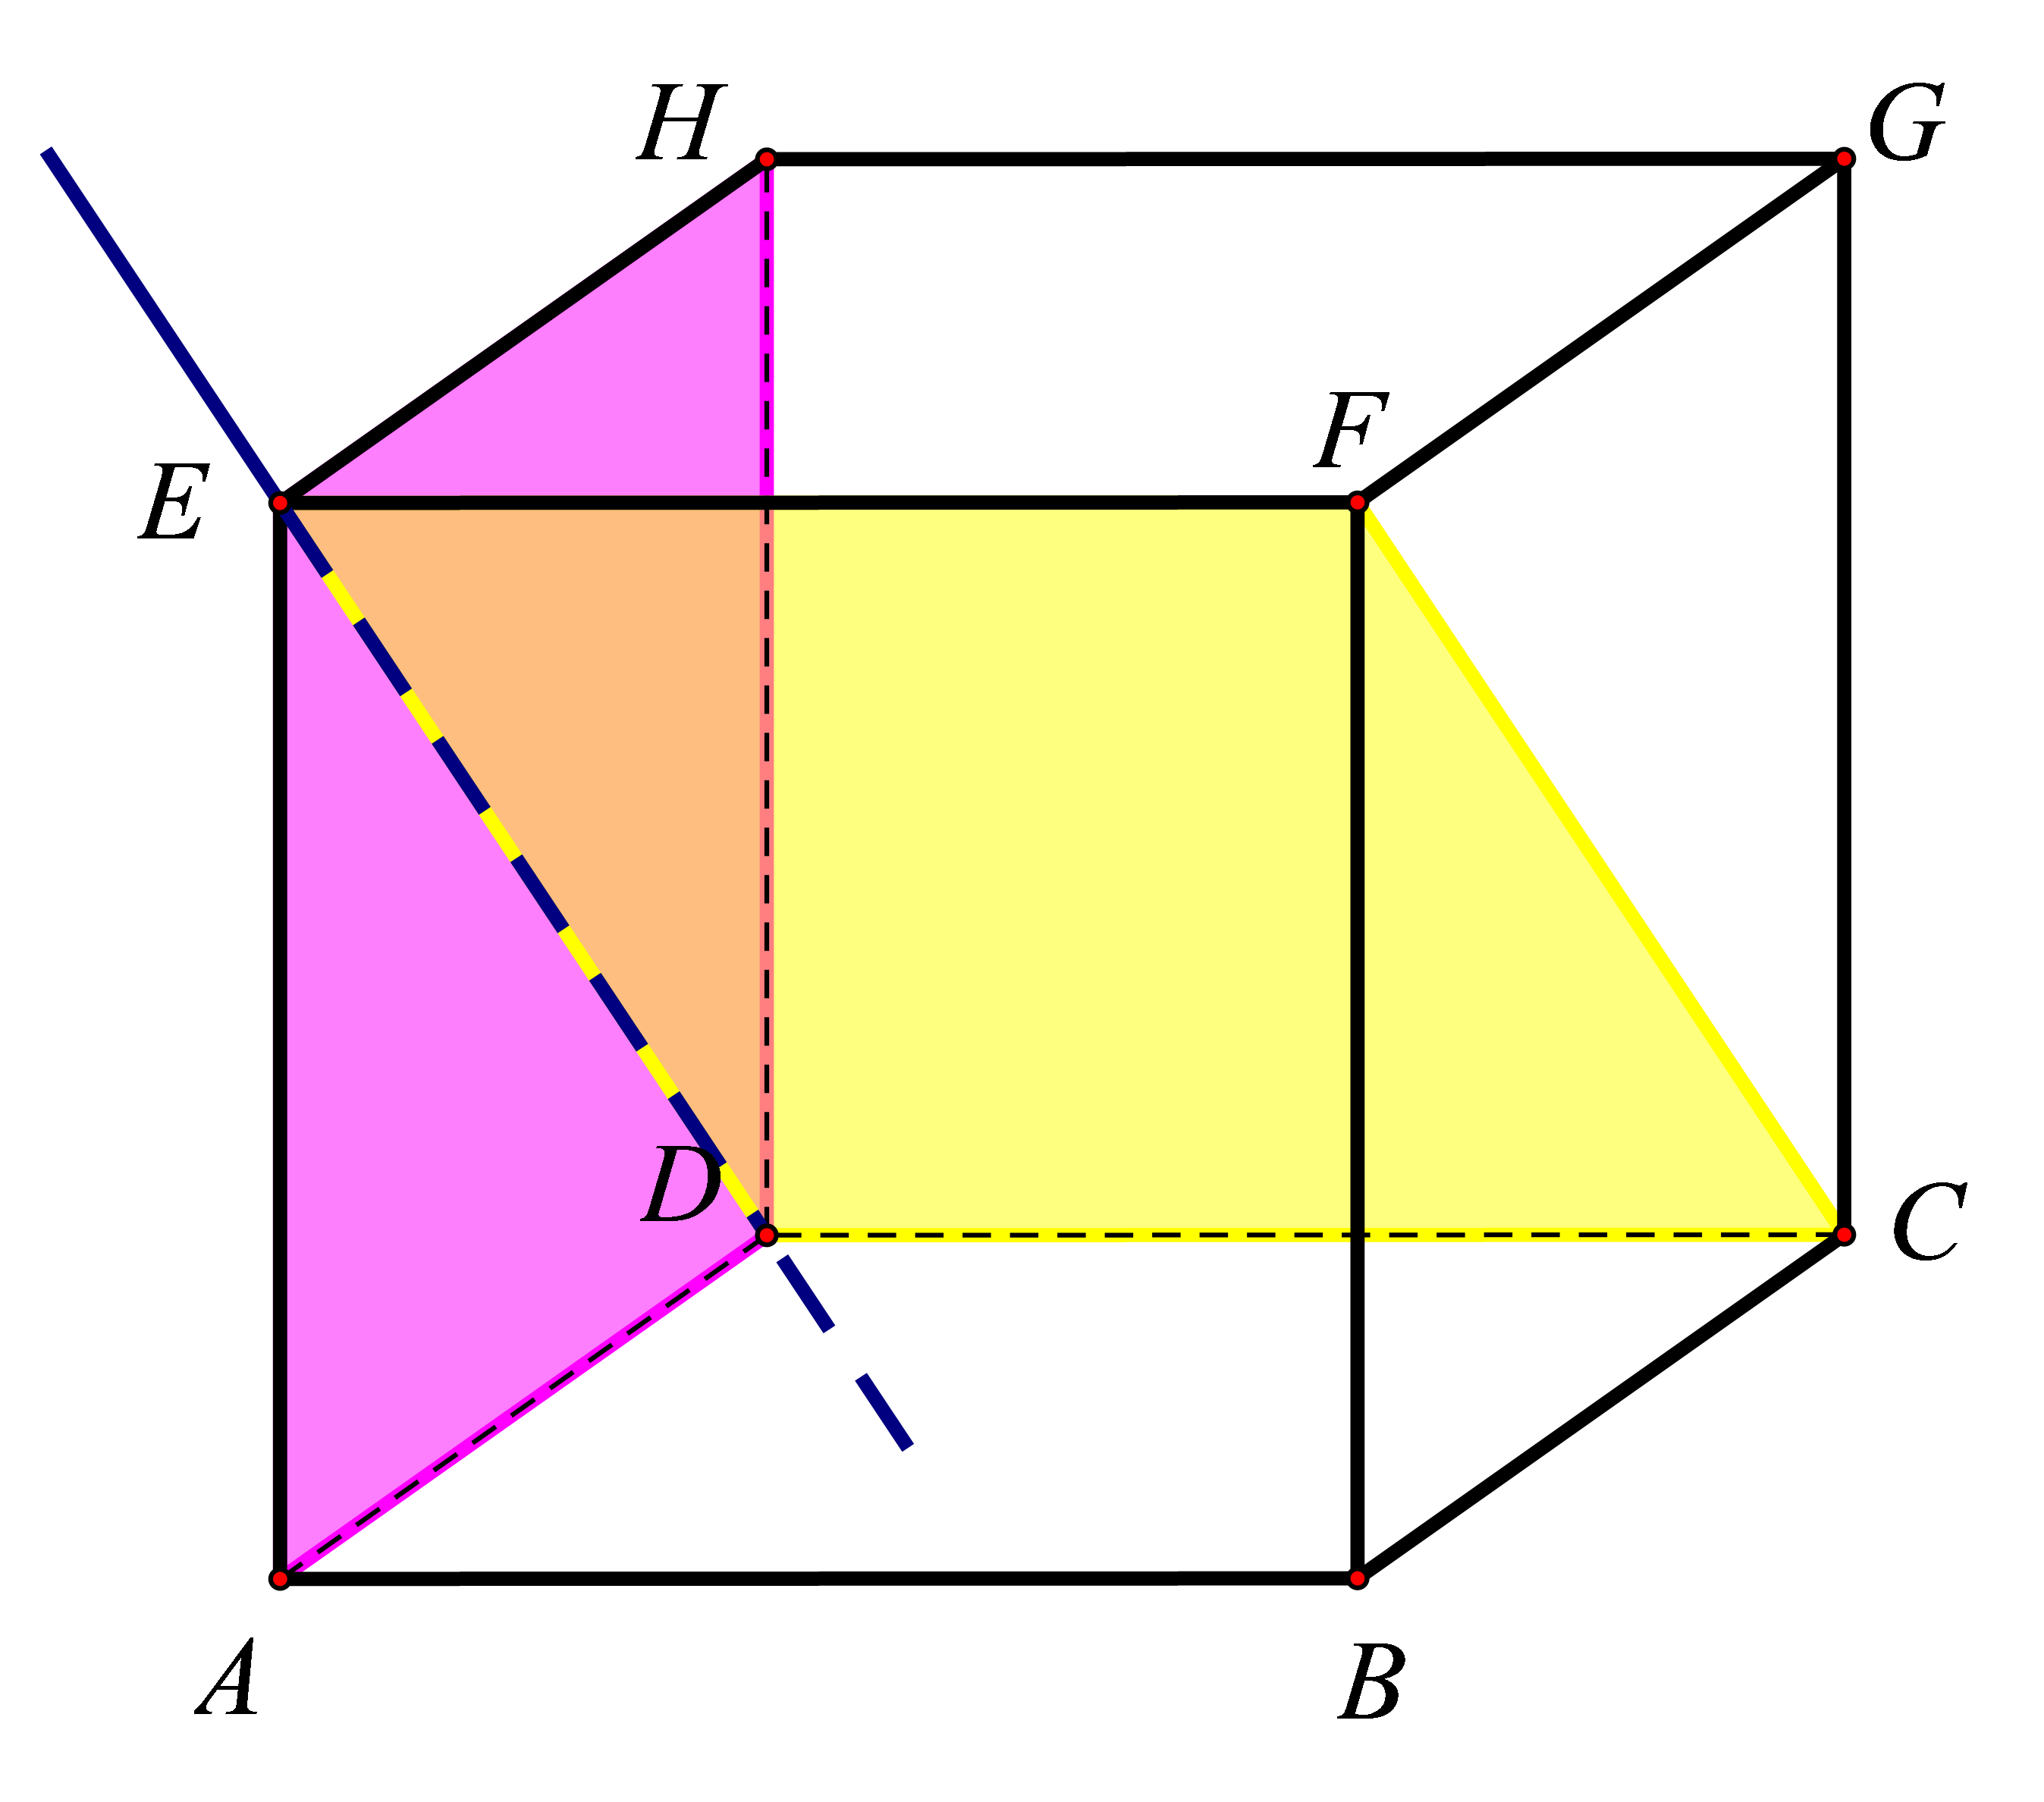 Na slici je prikaz modela prostora s isatknutim ravninama EDC i EAD s njihovim presjekom pravcem ED